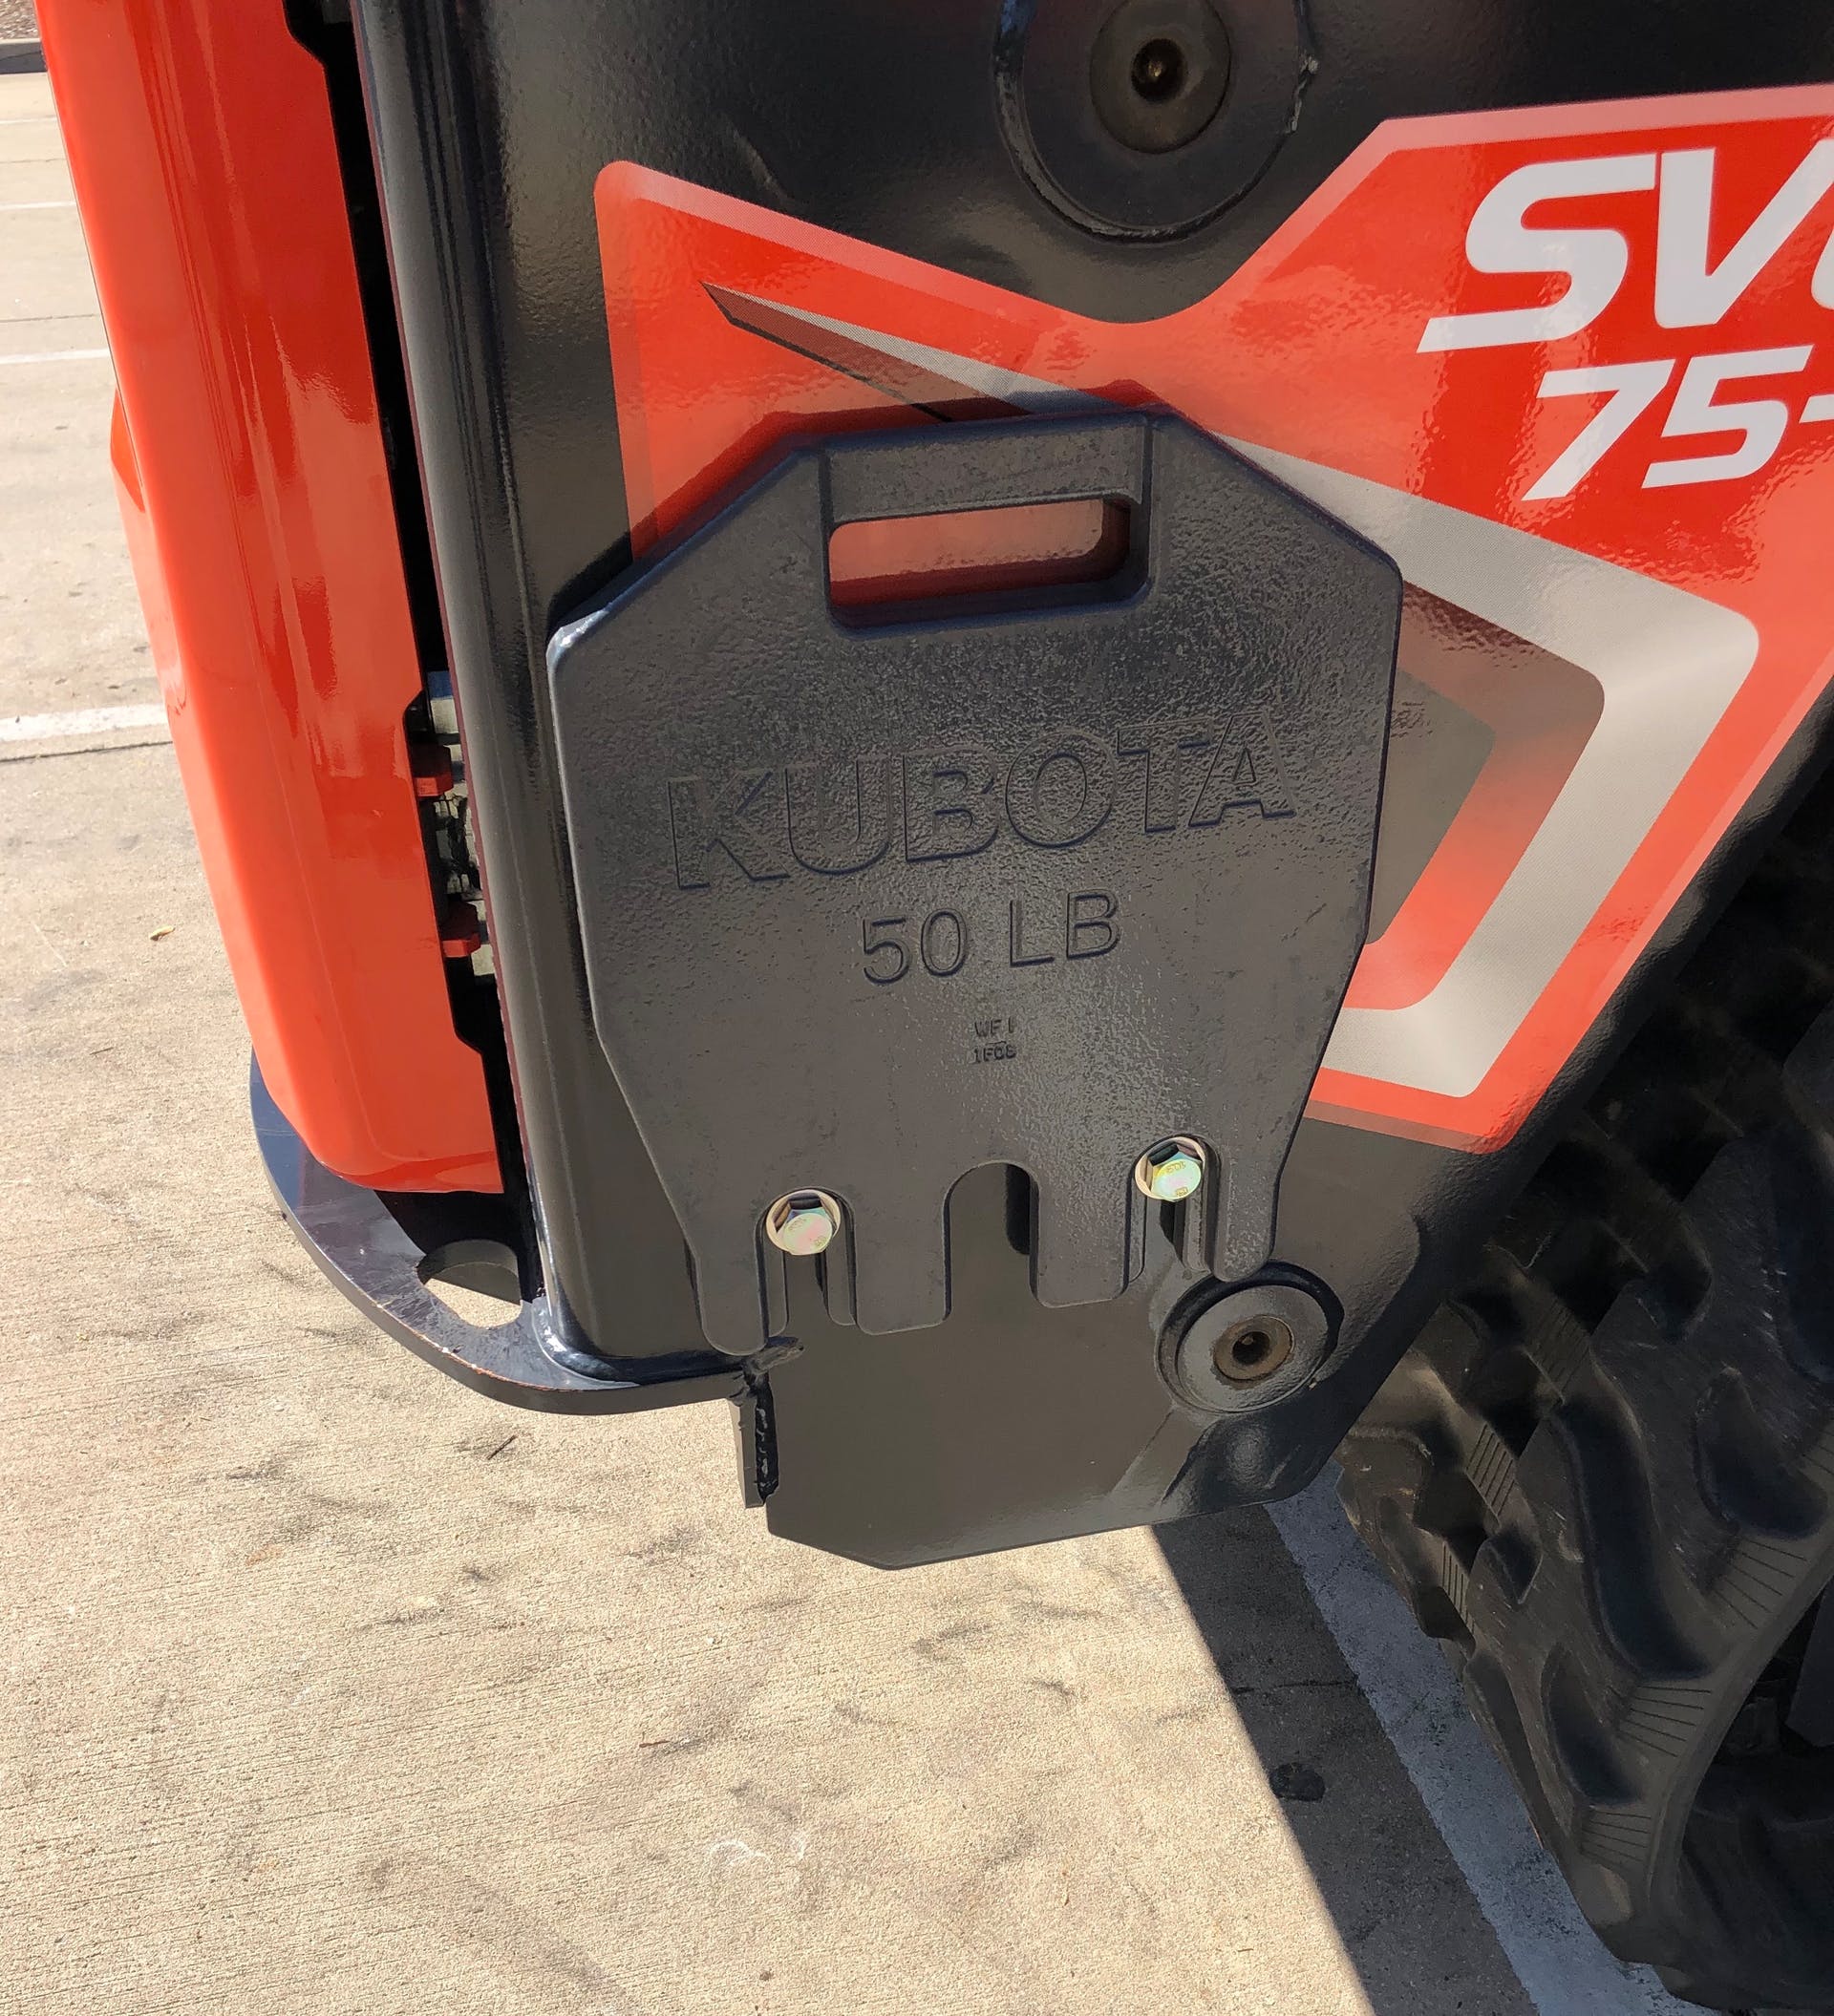 Kubota SVL75-3 compact track loader side view ballast location